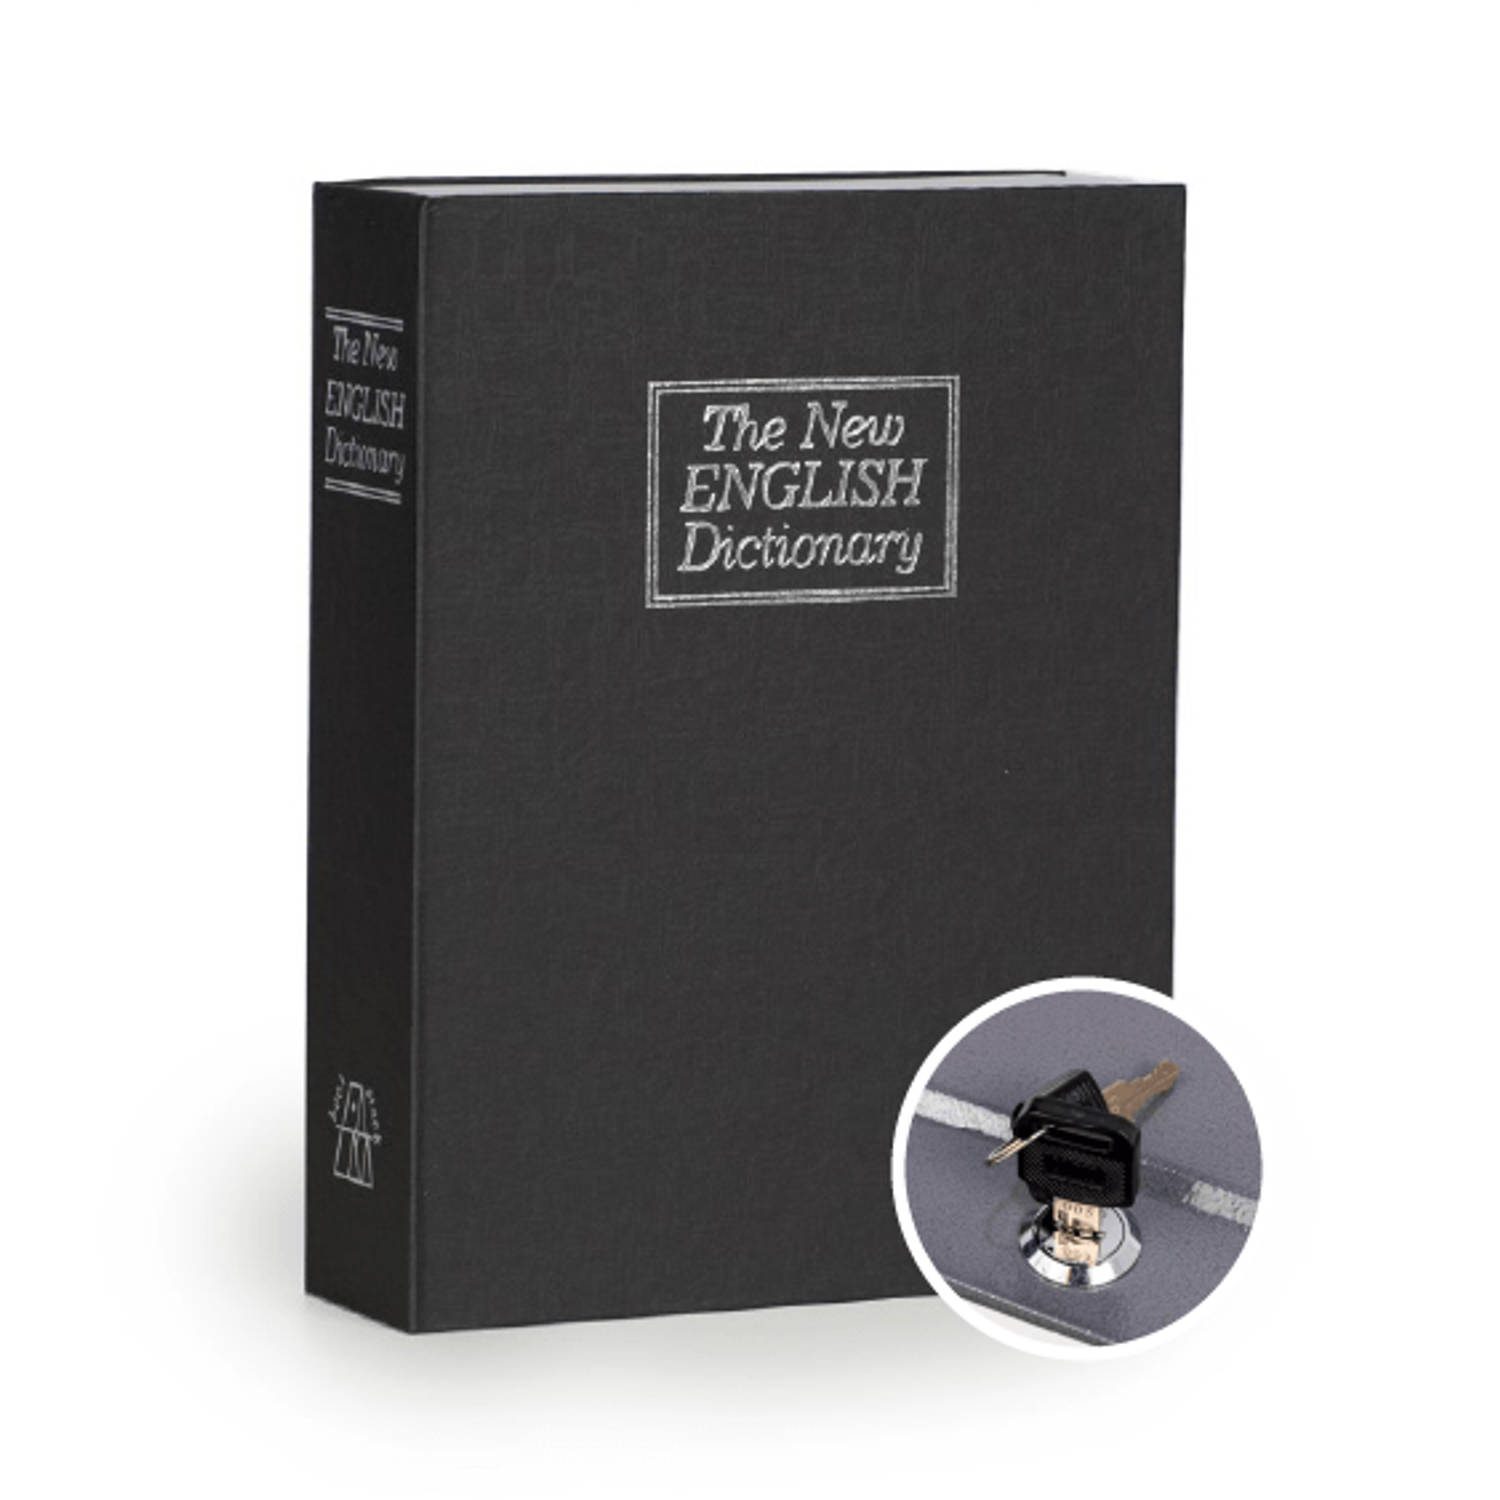 Securata Boek kluis met Sleutelslot - Zwart - 200 x 265 x 65 cm - Kluisje met sleutel - Verborgen Kluis in boek